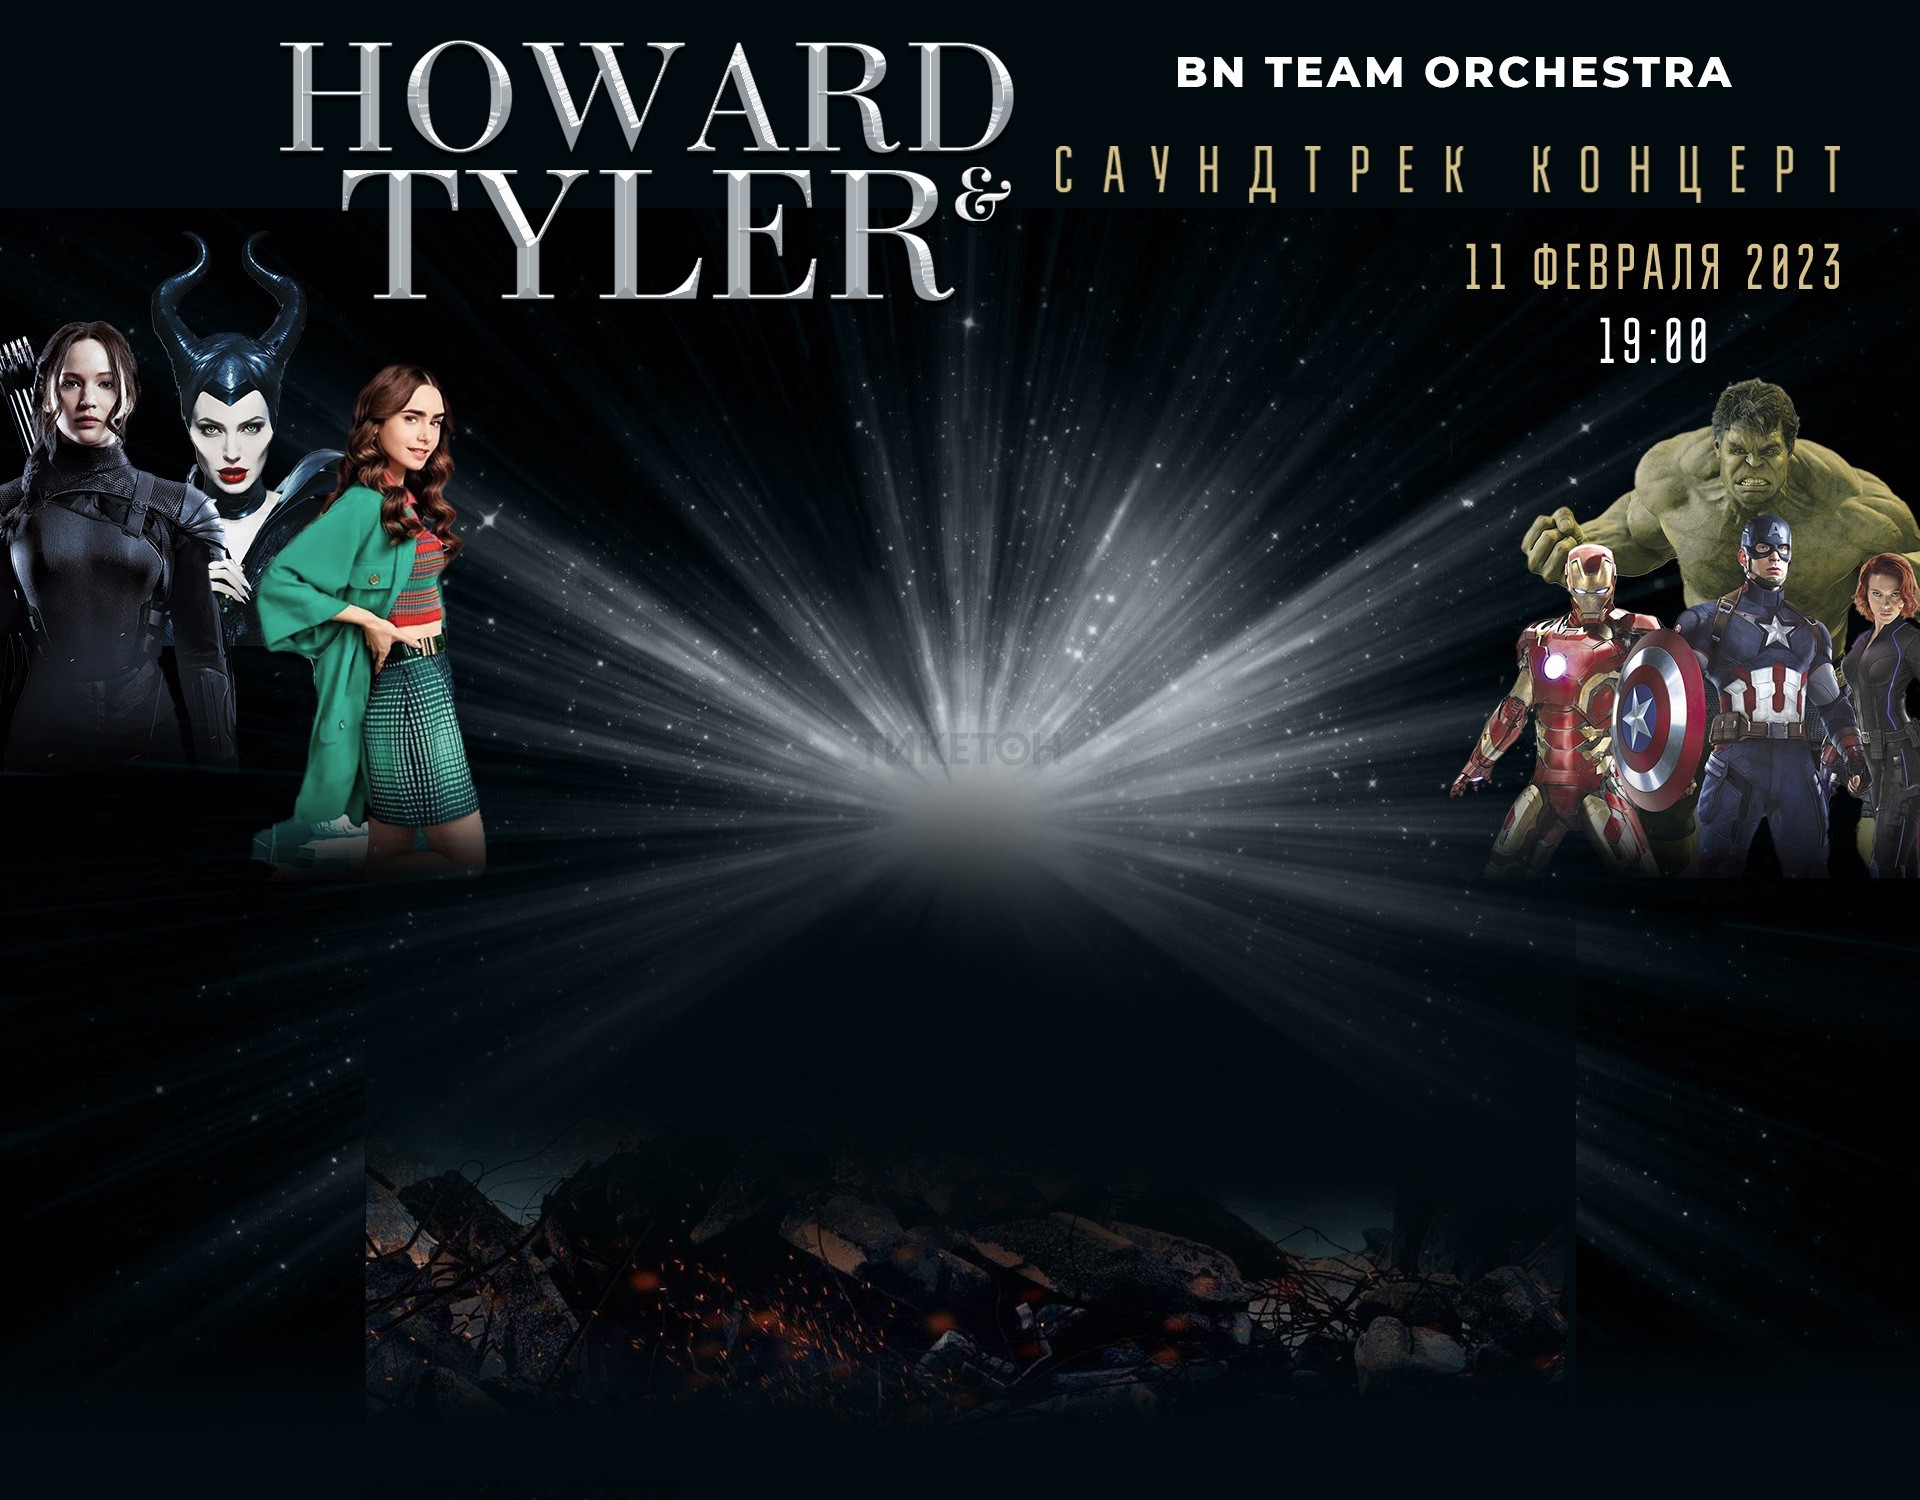 Саундтрек концерт: Howard&Tyler в Астане